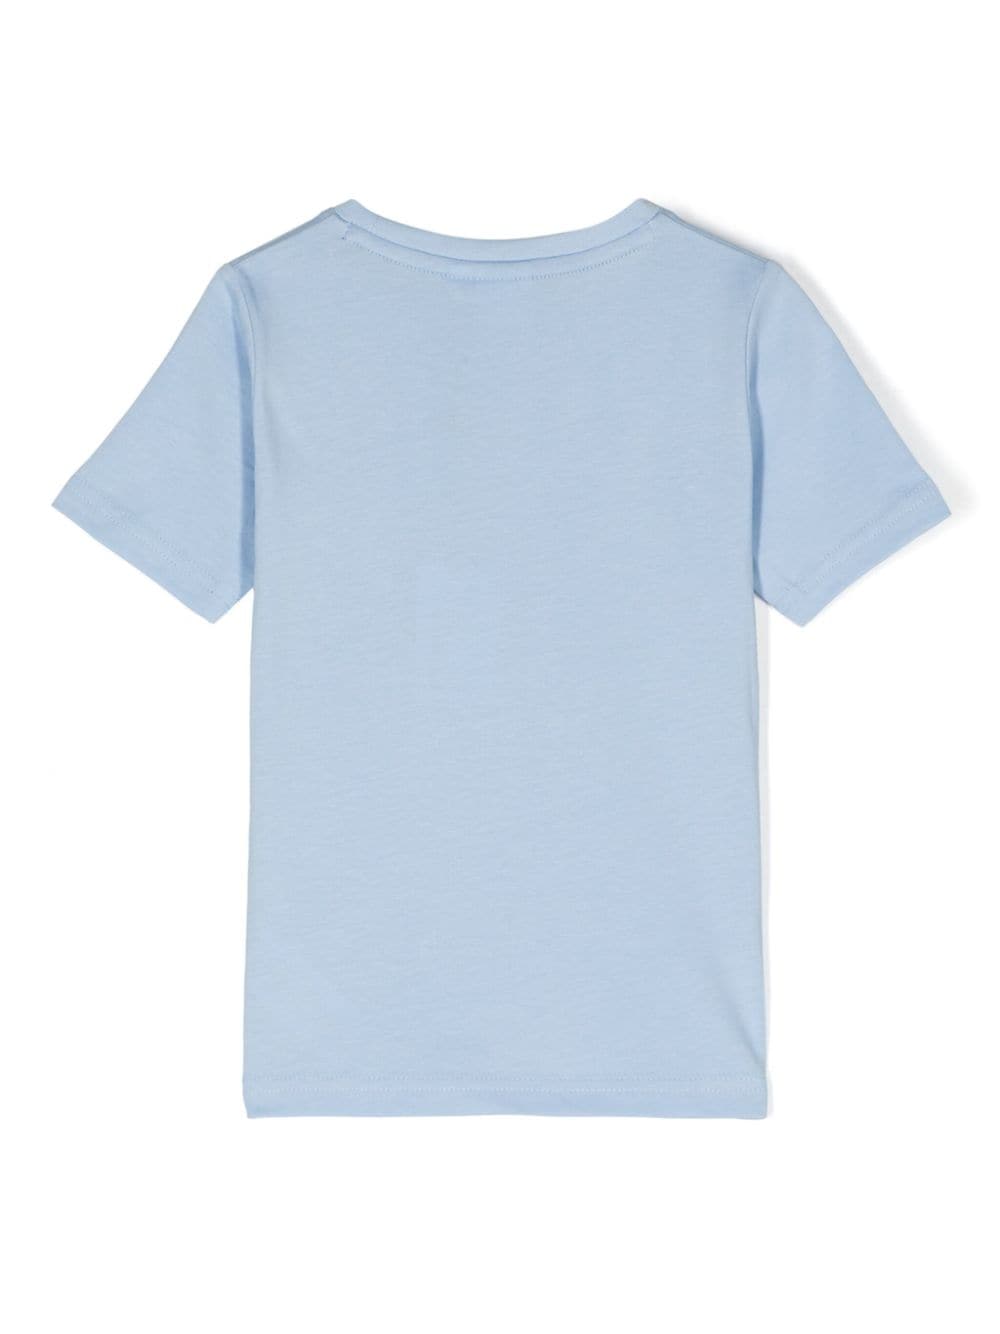 Light blue t-shirt for boys with logo